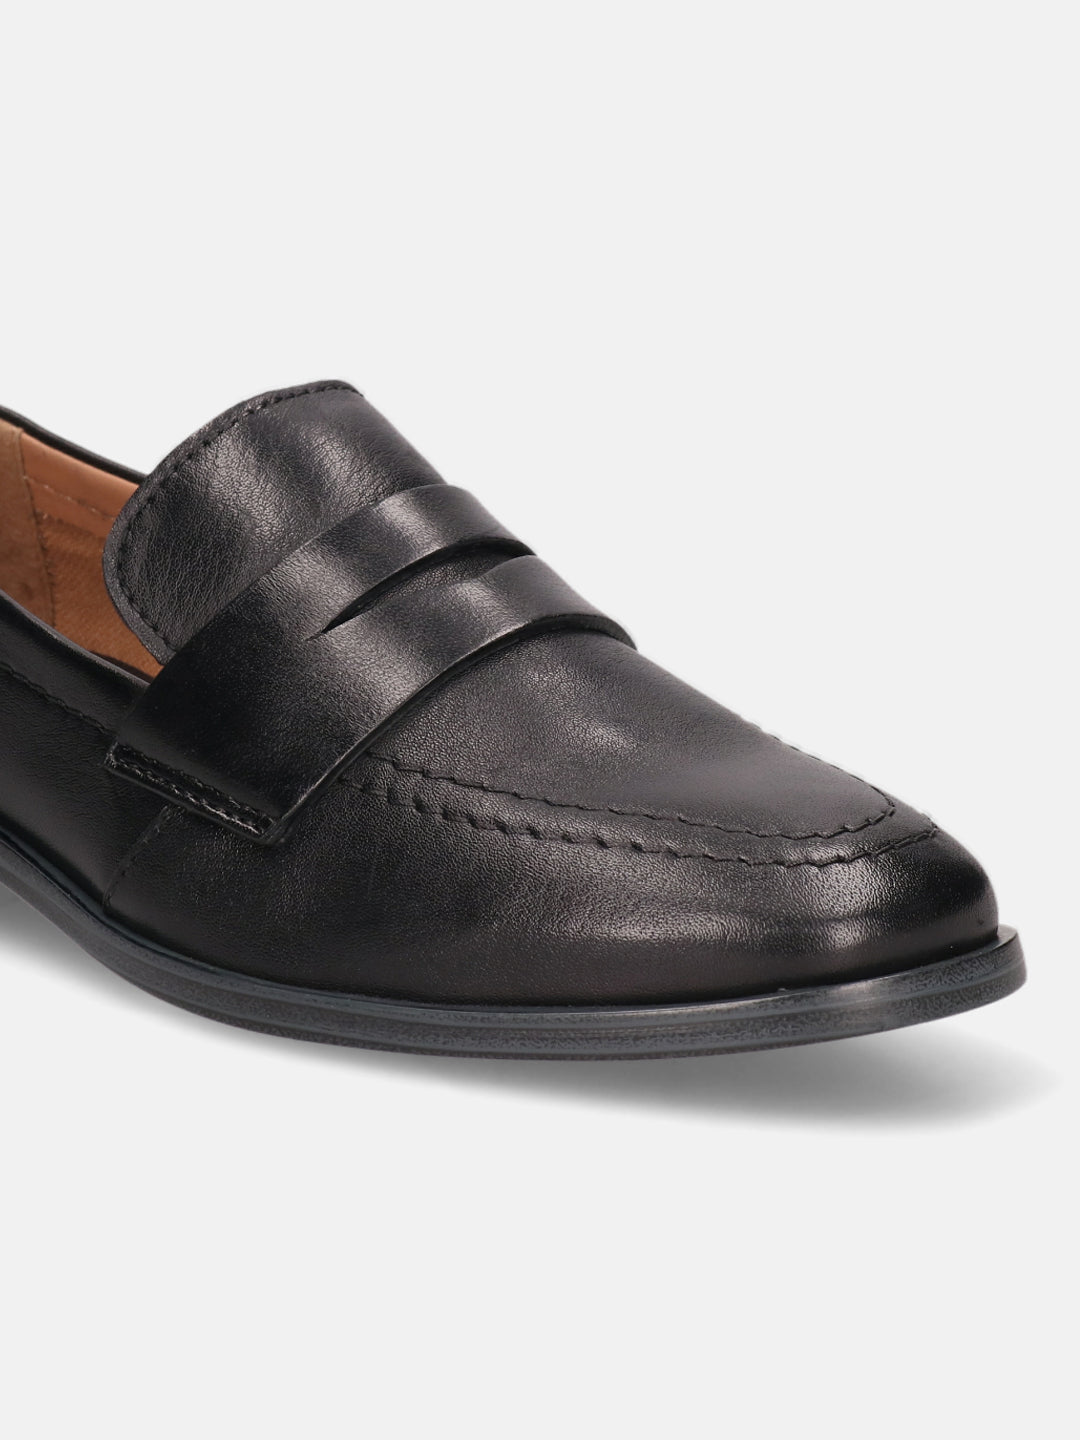 Rosalie Black Leather Loafers